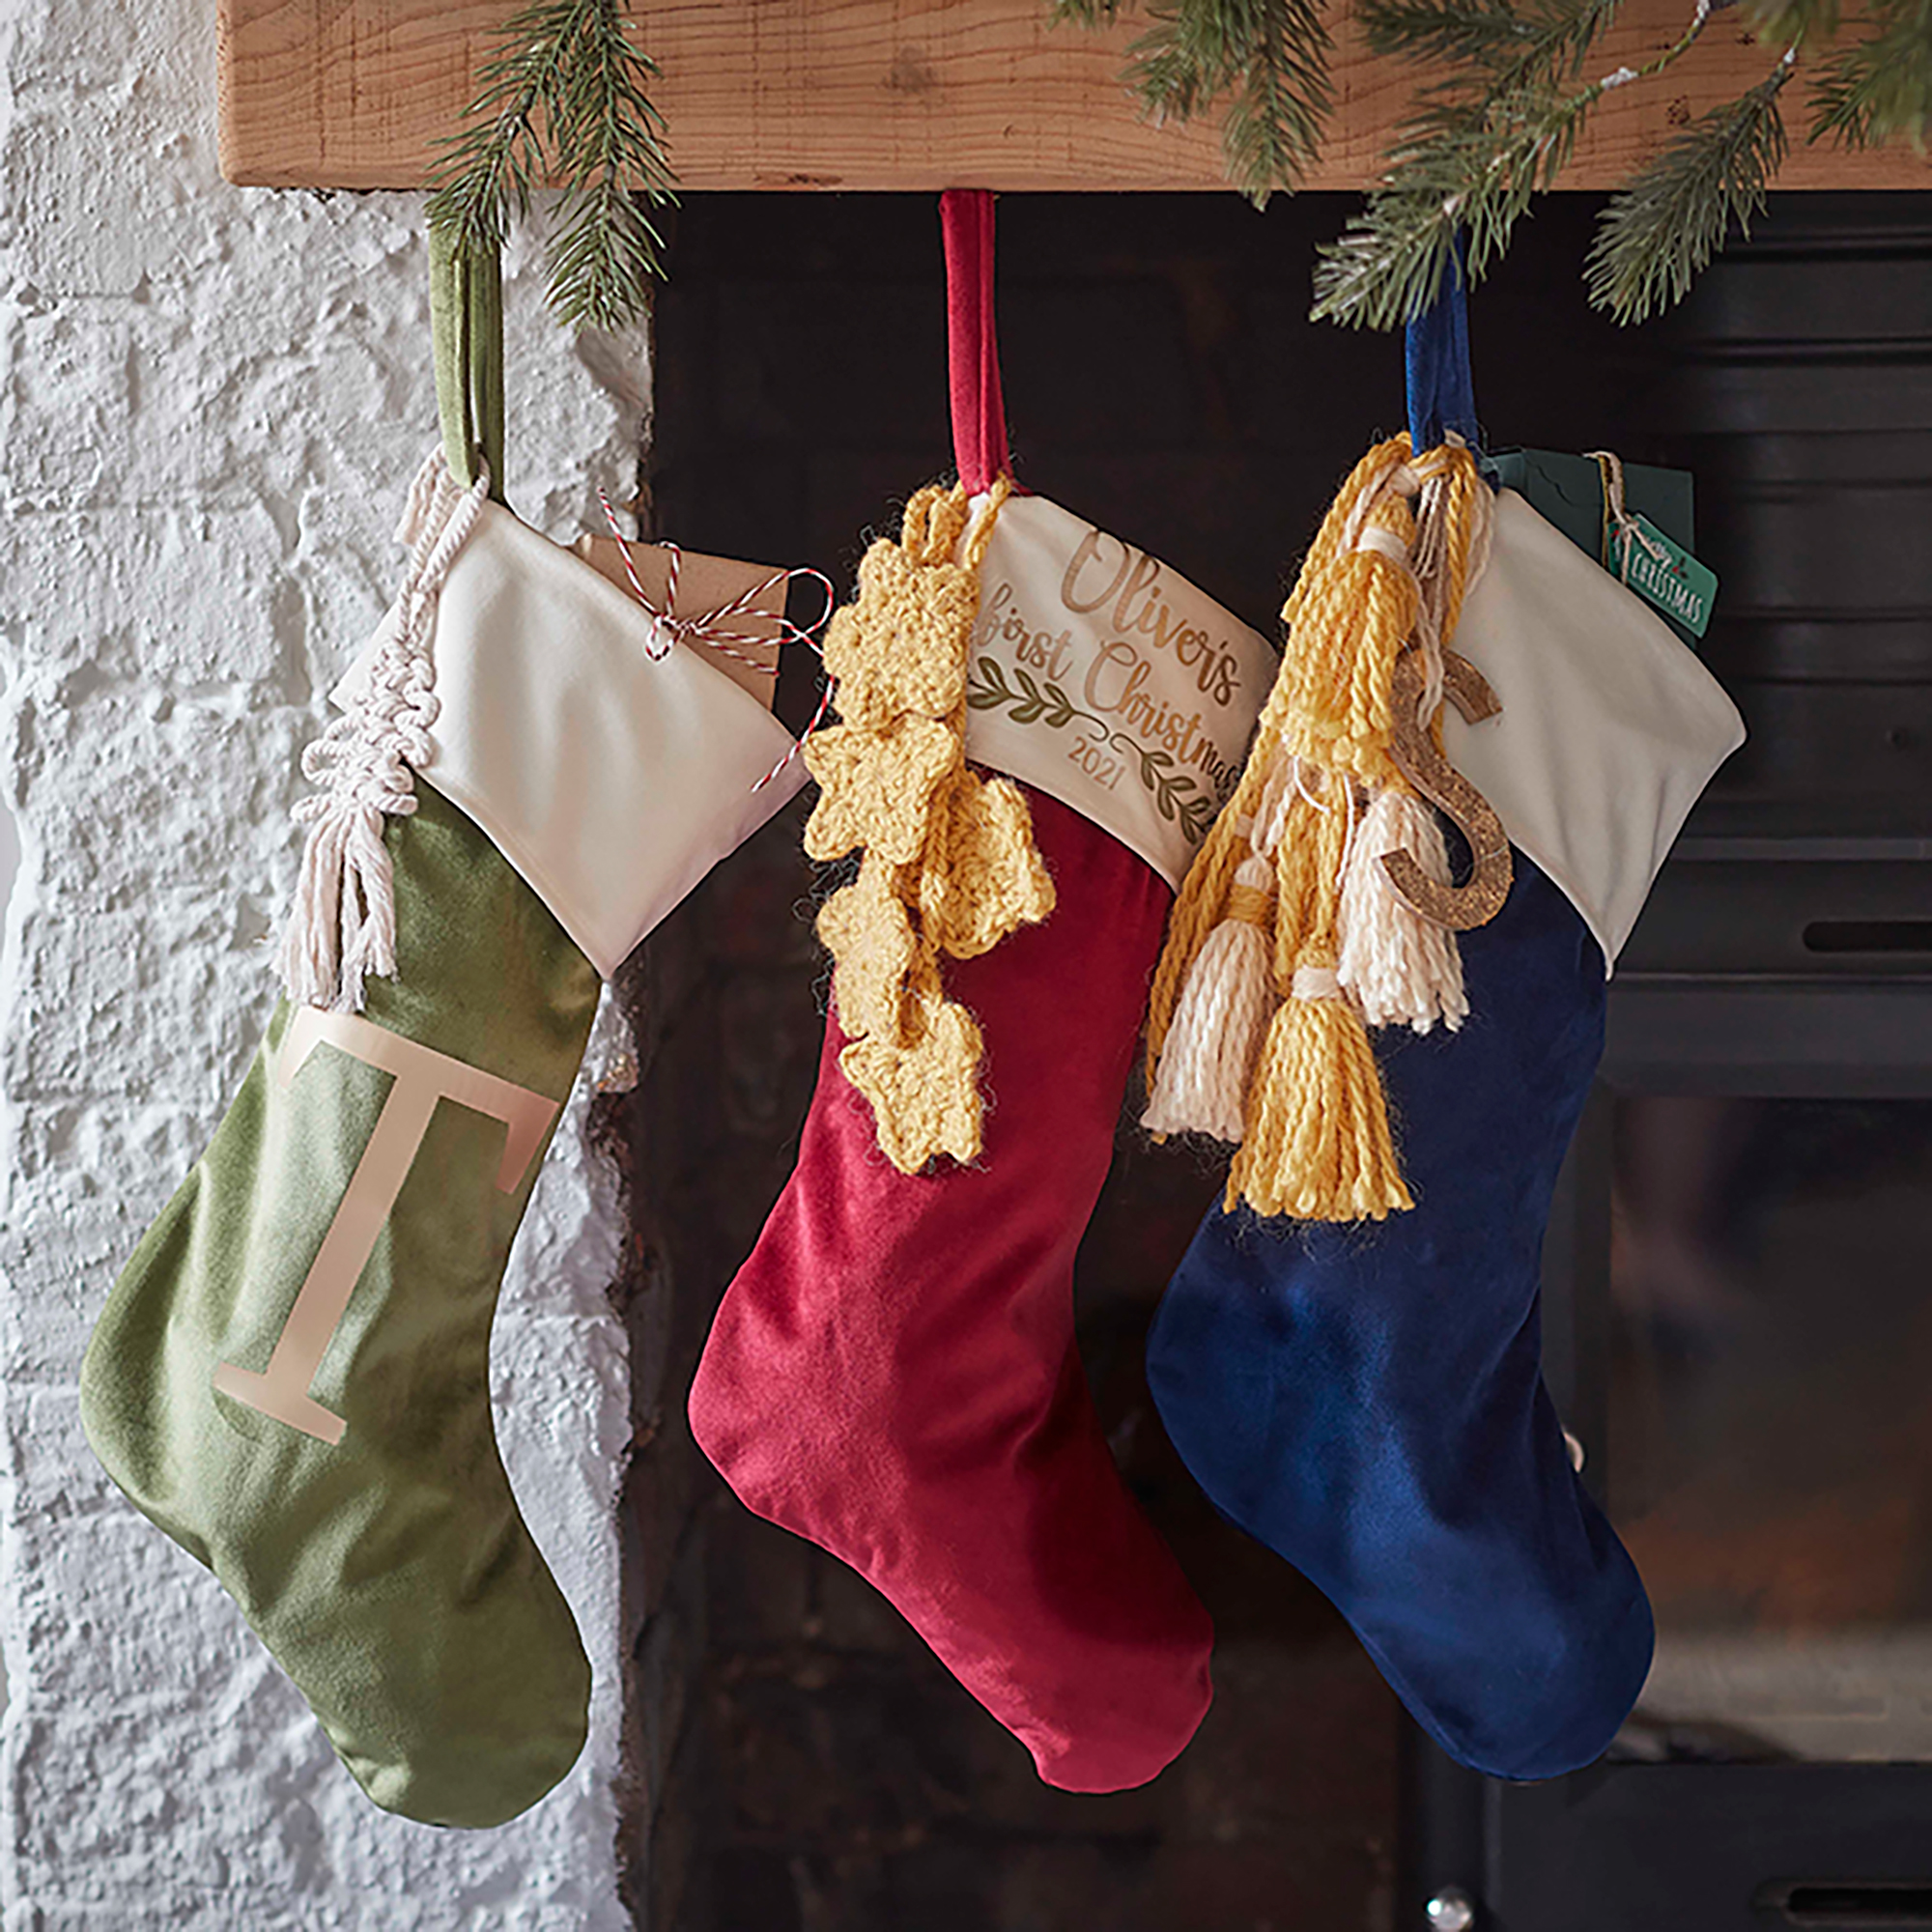 Cricut: How to Make Personalised Christmas Stockings | Hobbycraft